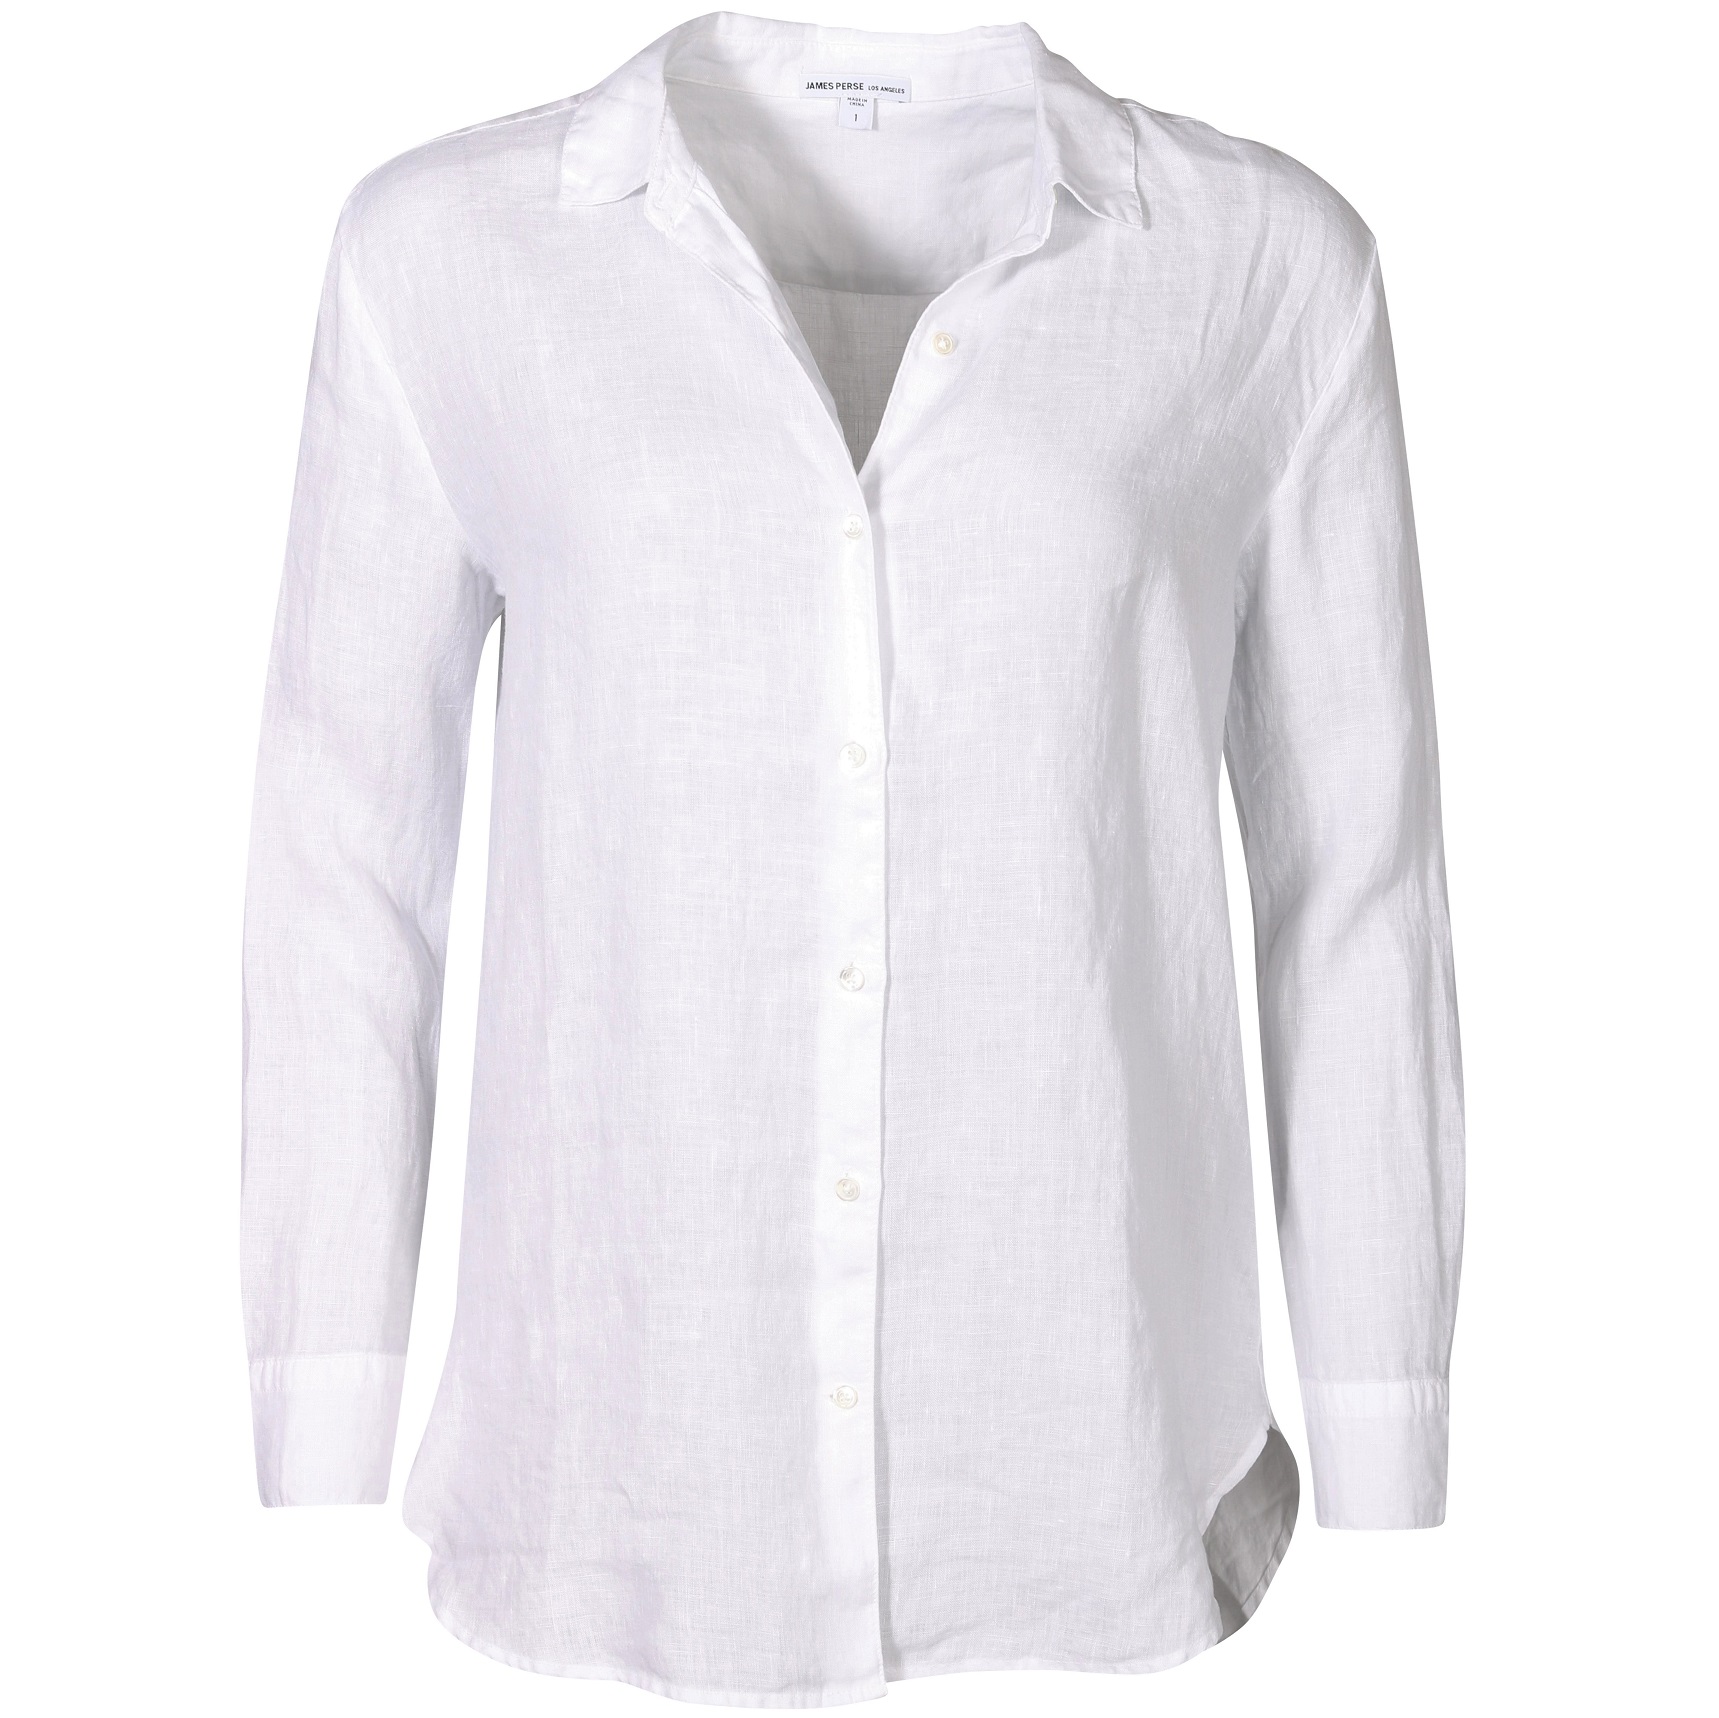 JAMES PERSE Light Weight Linen Shirt in White 2/M